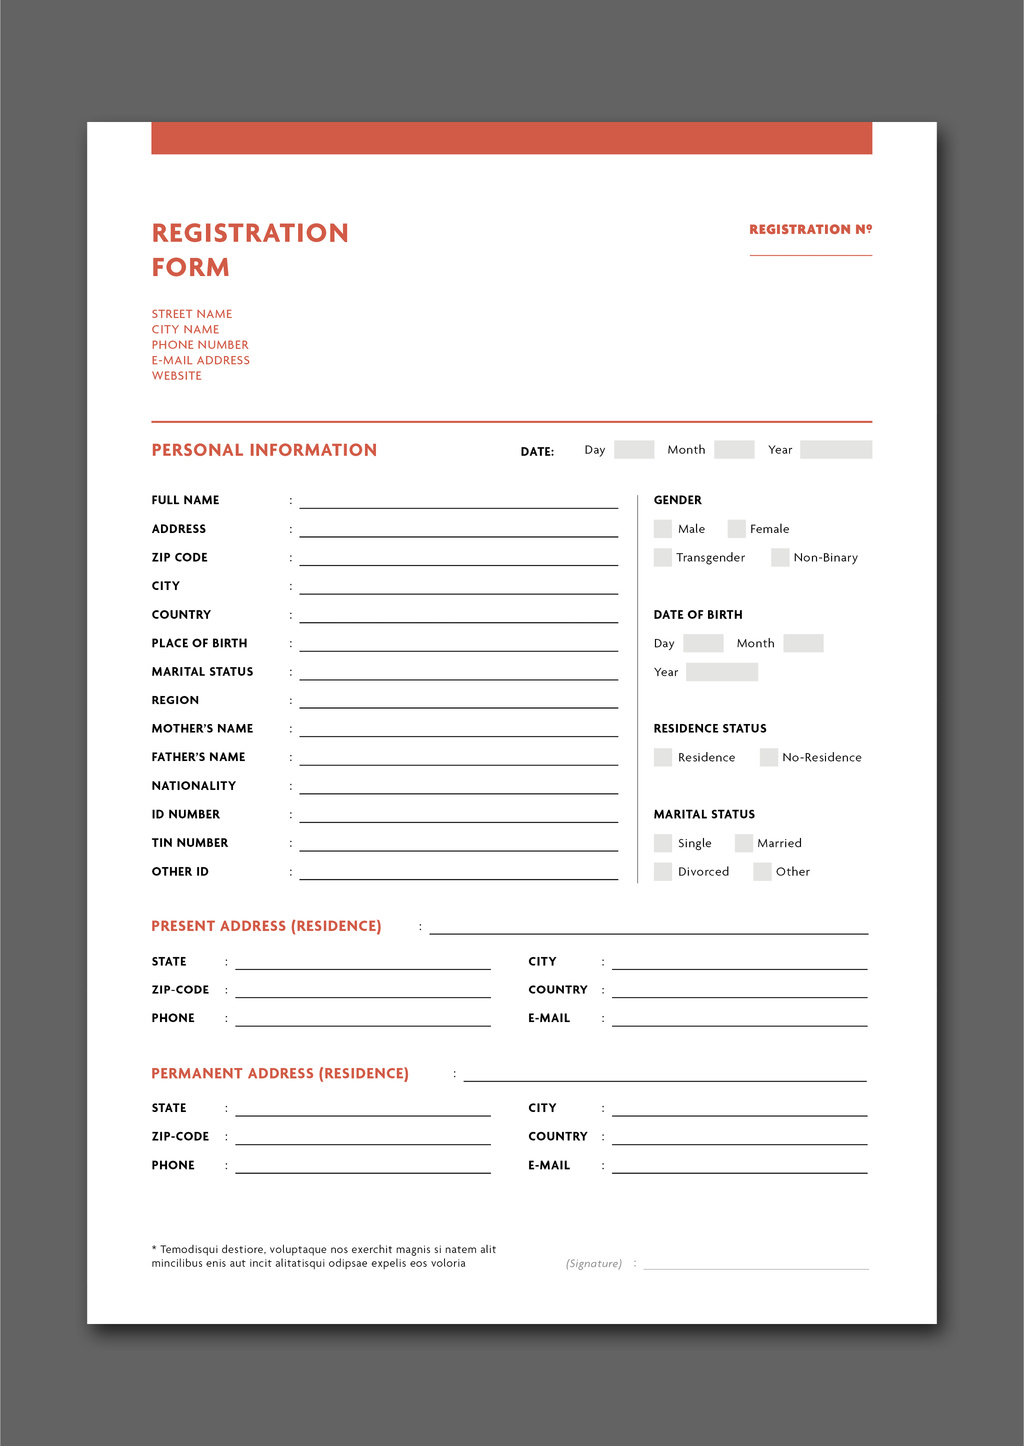 registration-form-layout-red-indd